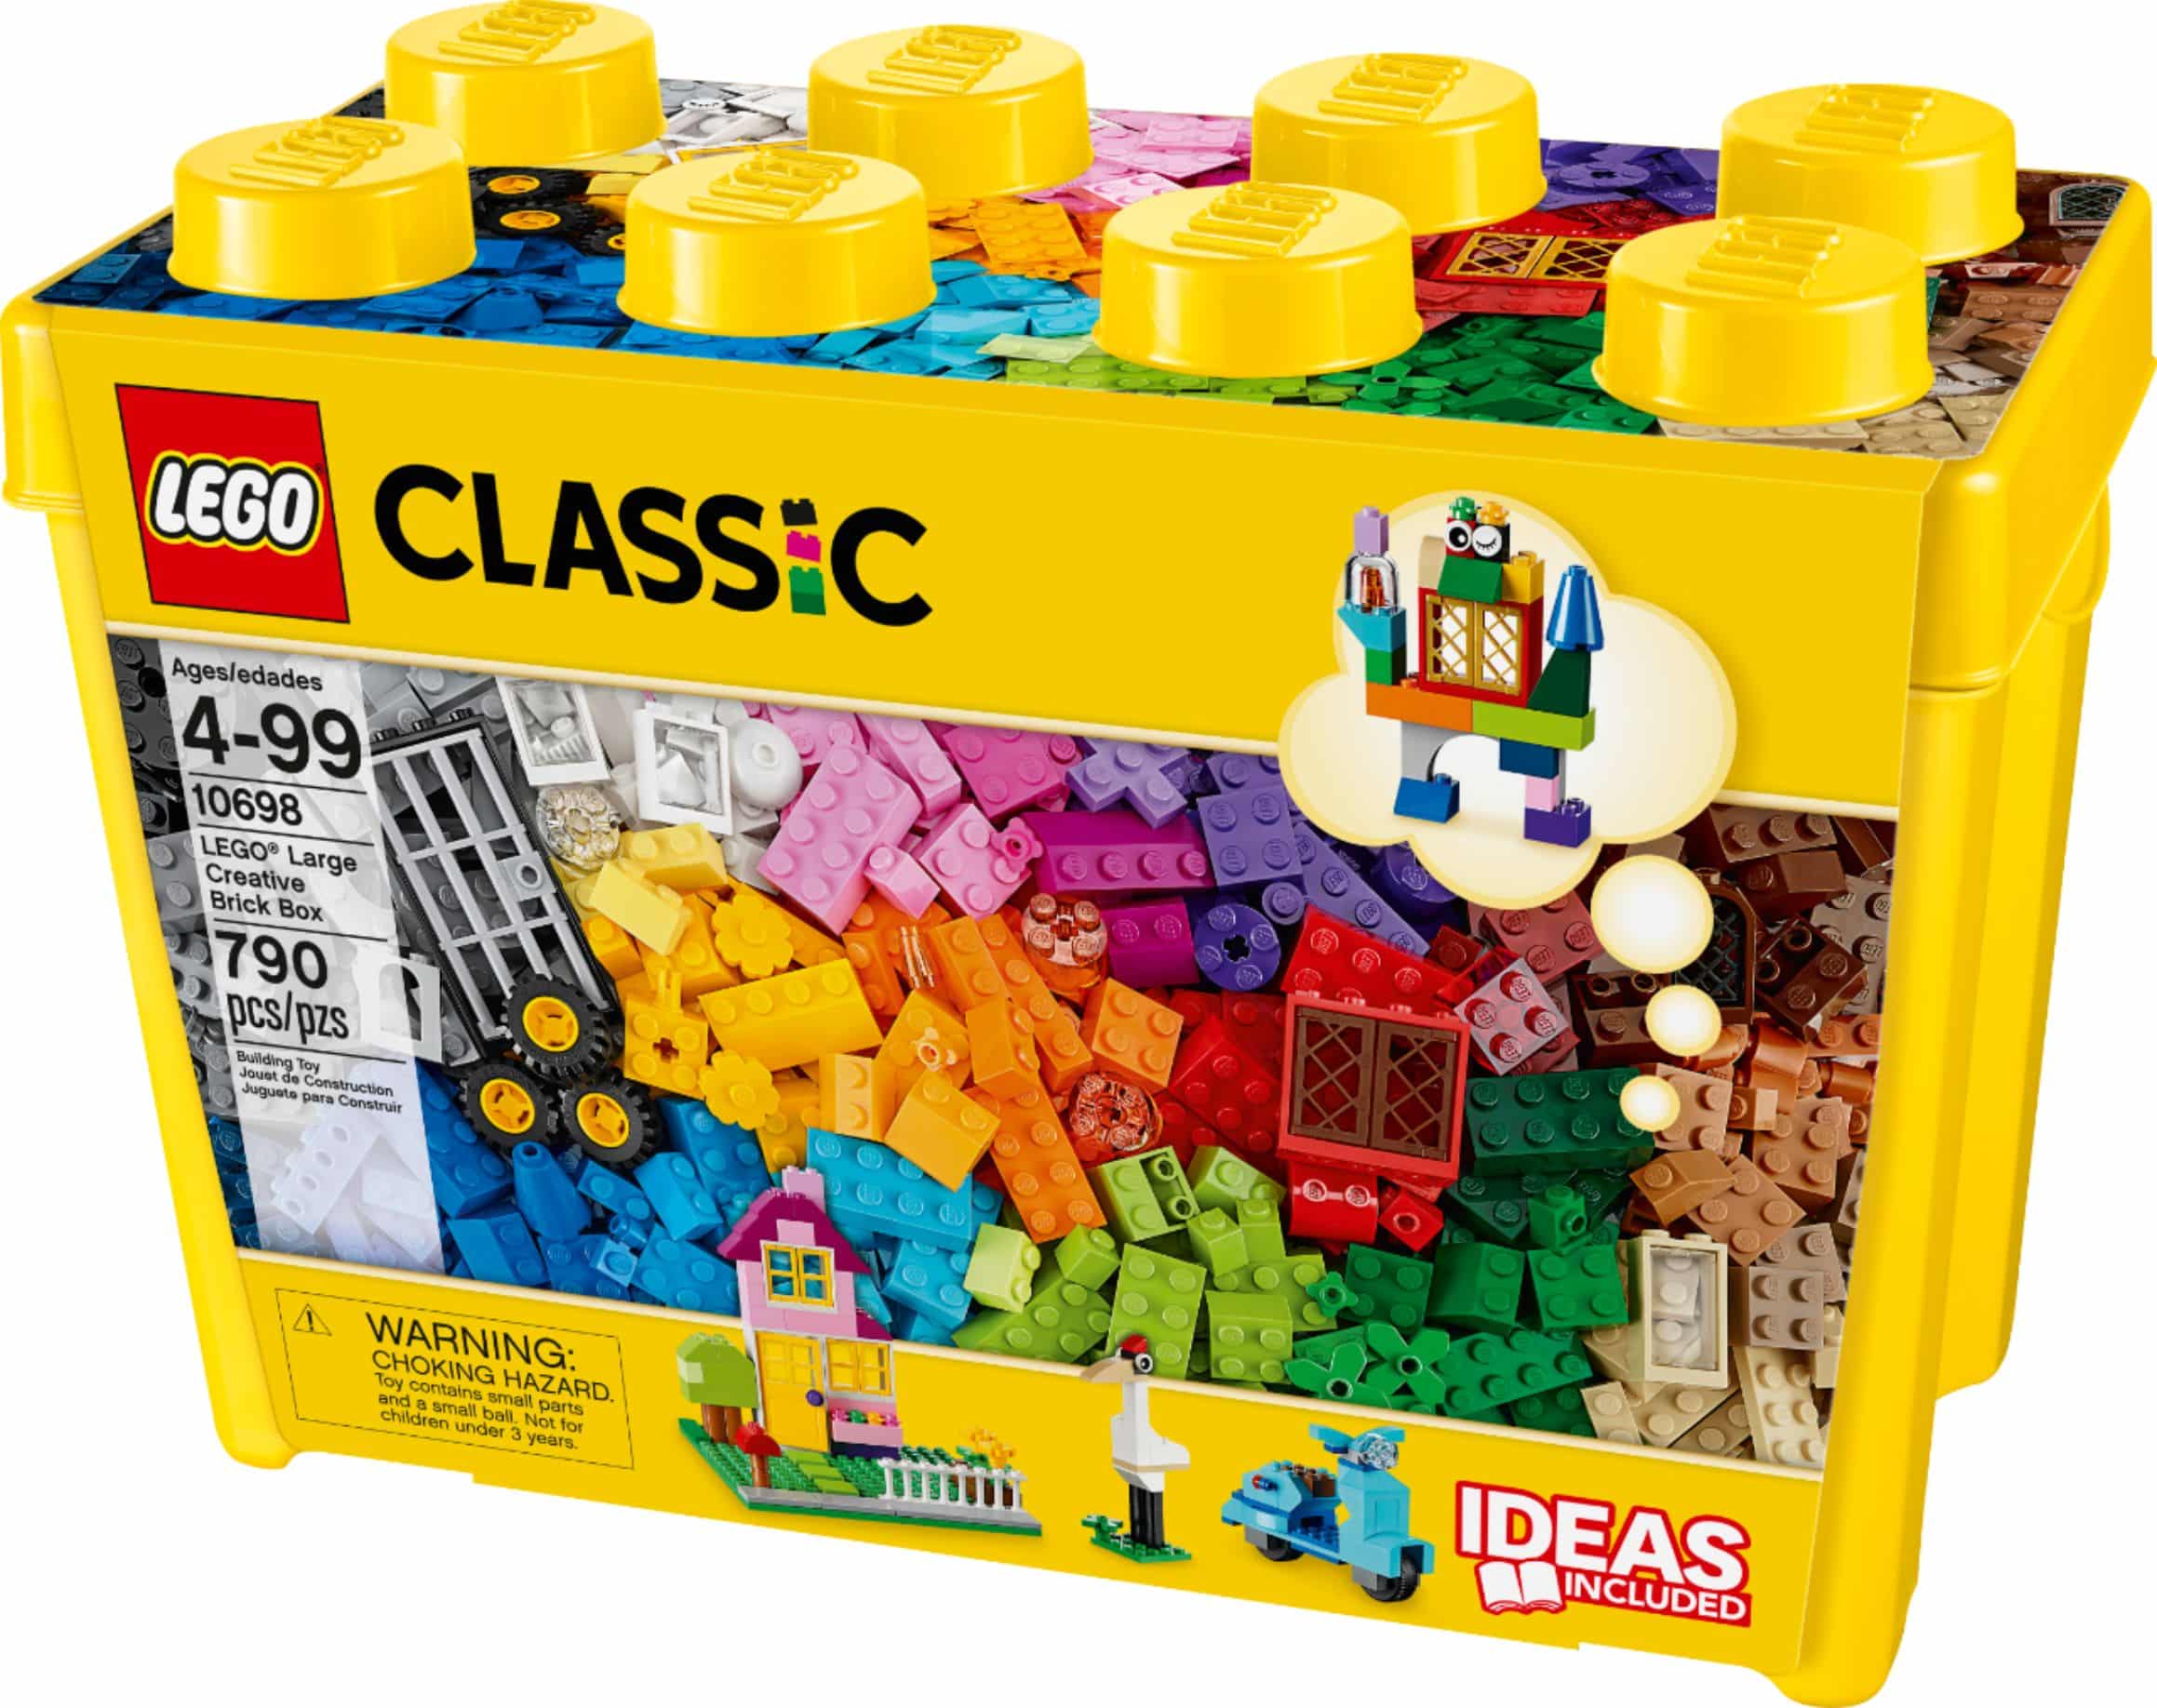 Lego 10698 Classic Large Creative Brick Box Set with Storage Box Children's Toy 